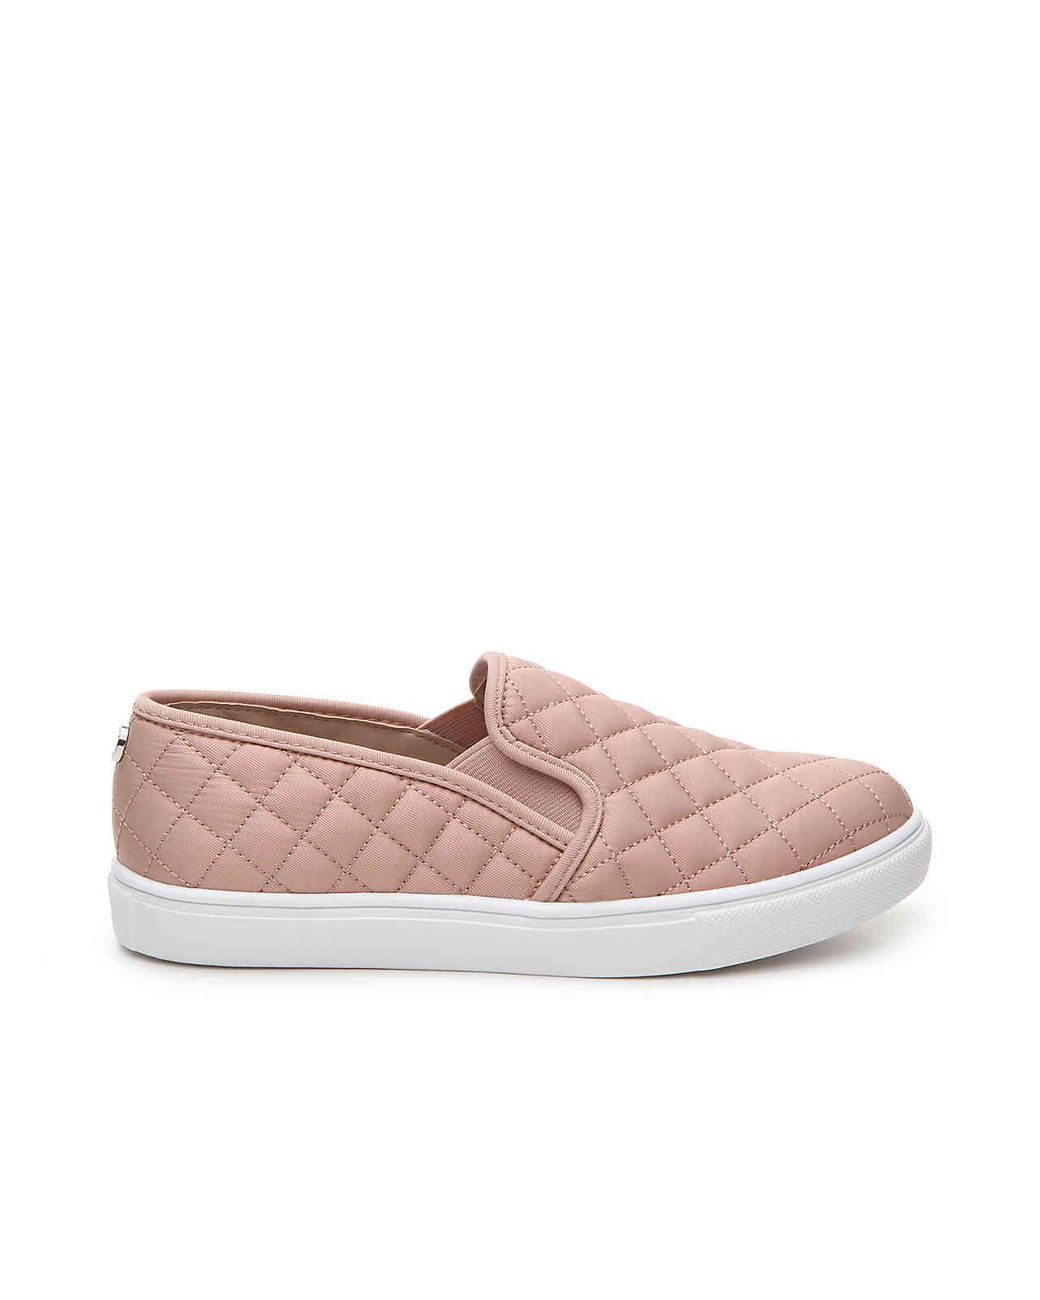 Steve Madden Ecentrcq Slip-on Sneaker in Pink | Lyst